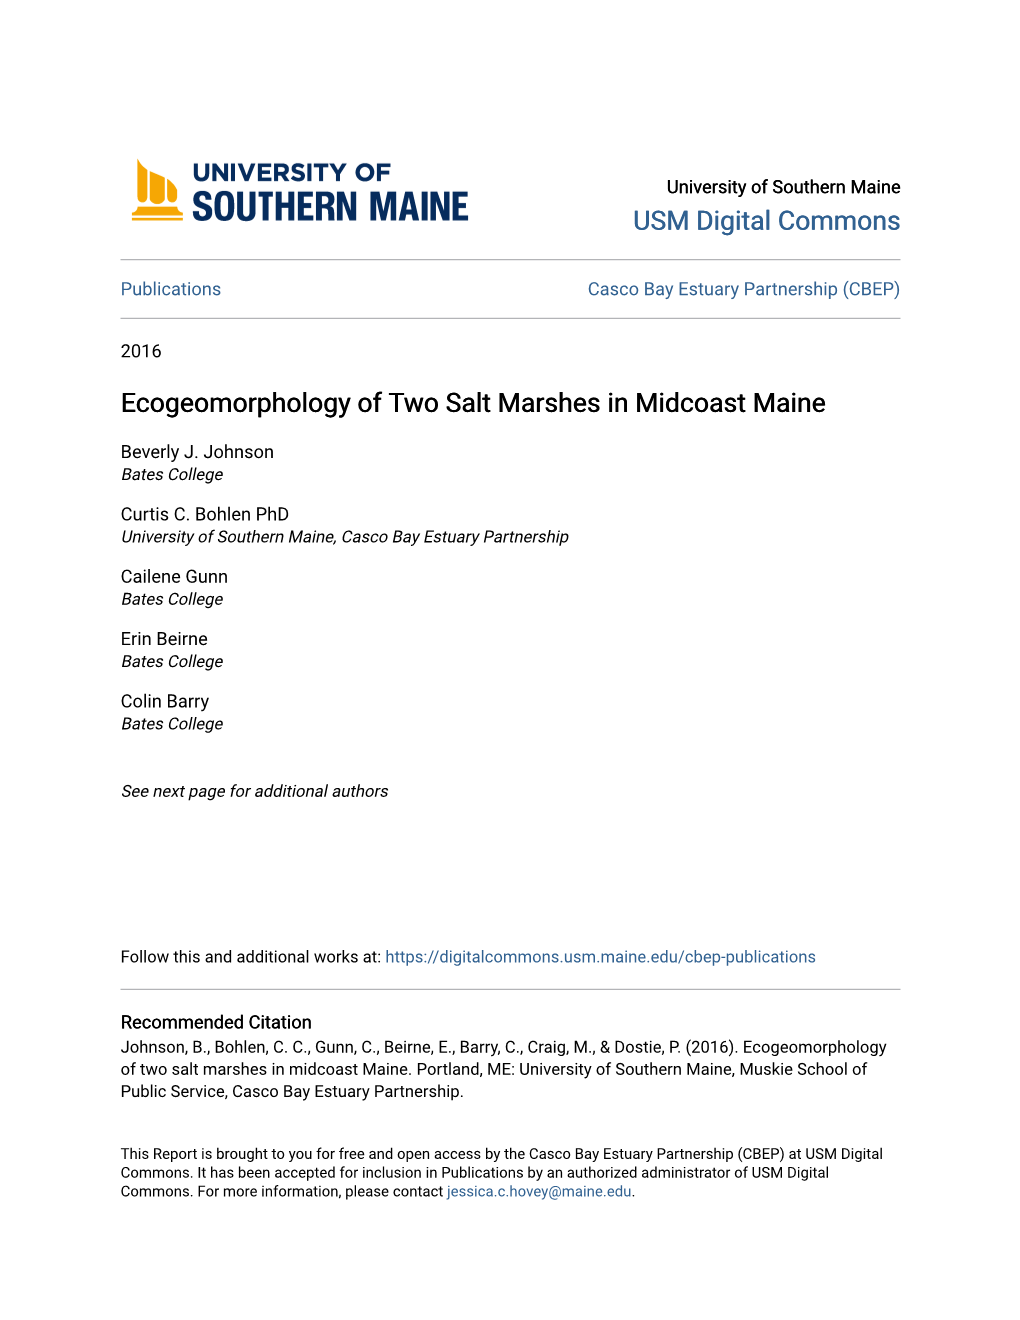 Ecogeomorphology of Two Salt Marshes in Midcoast Maine